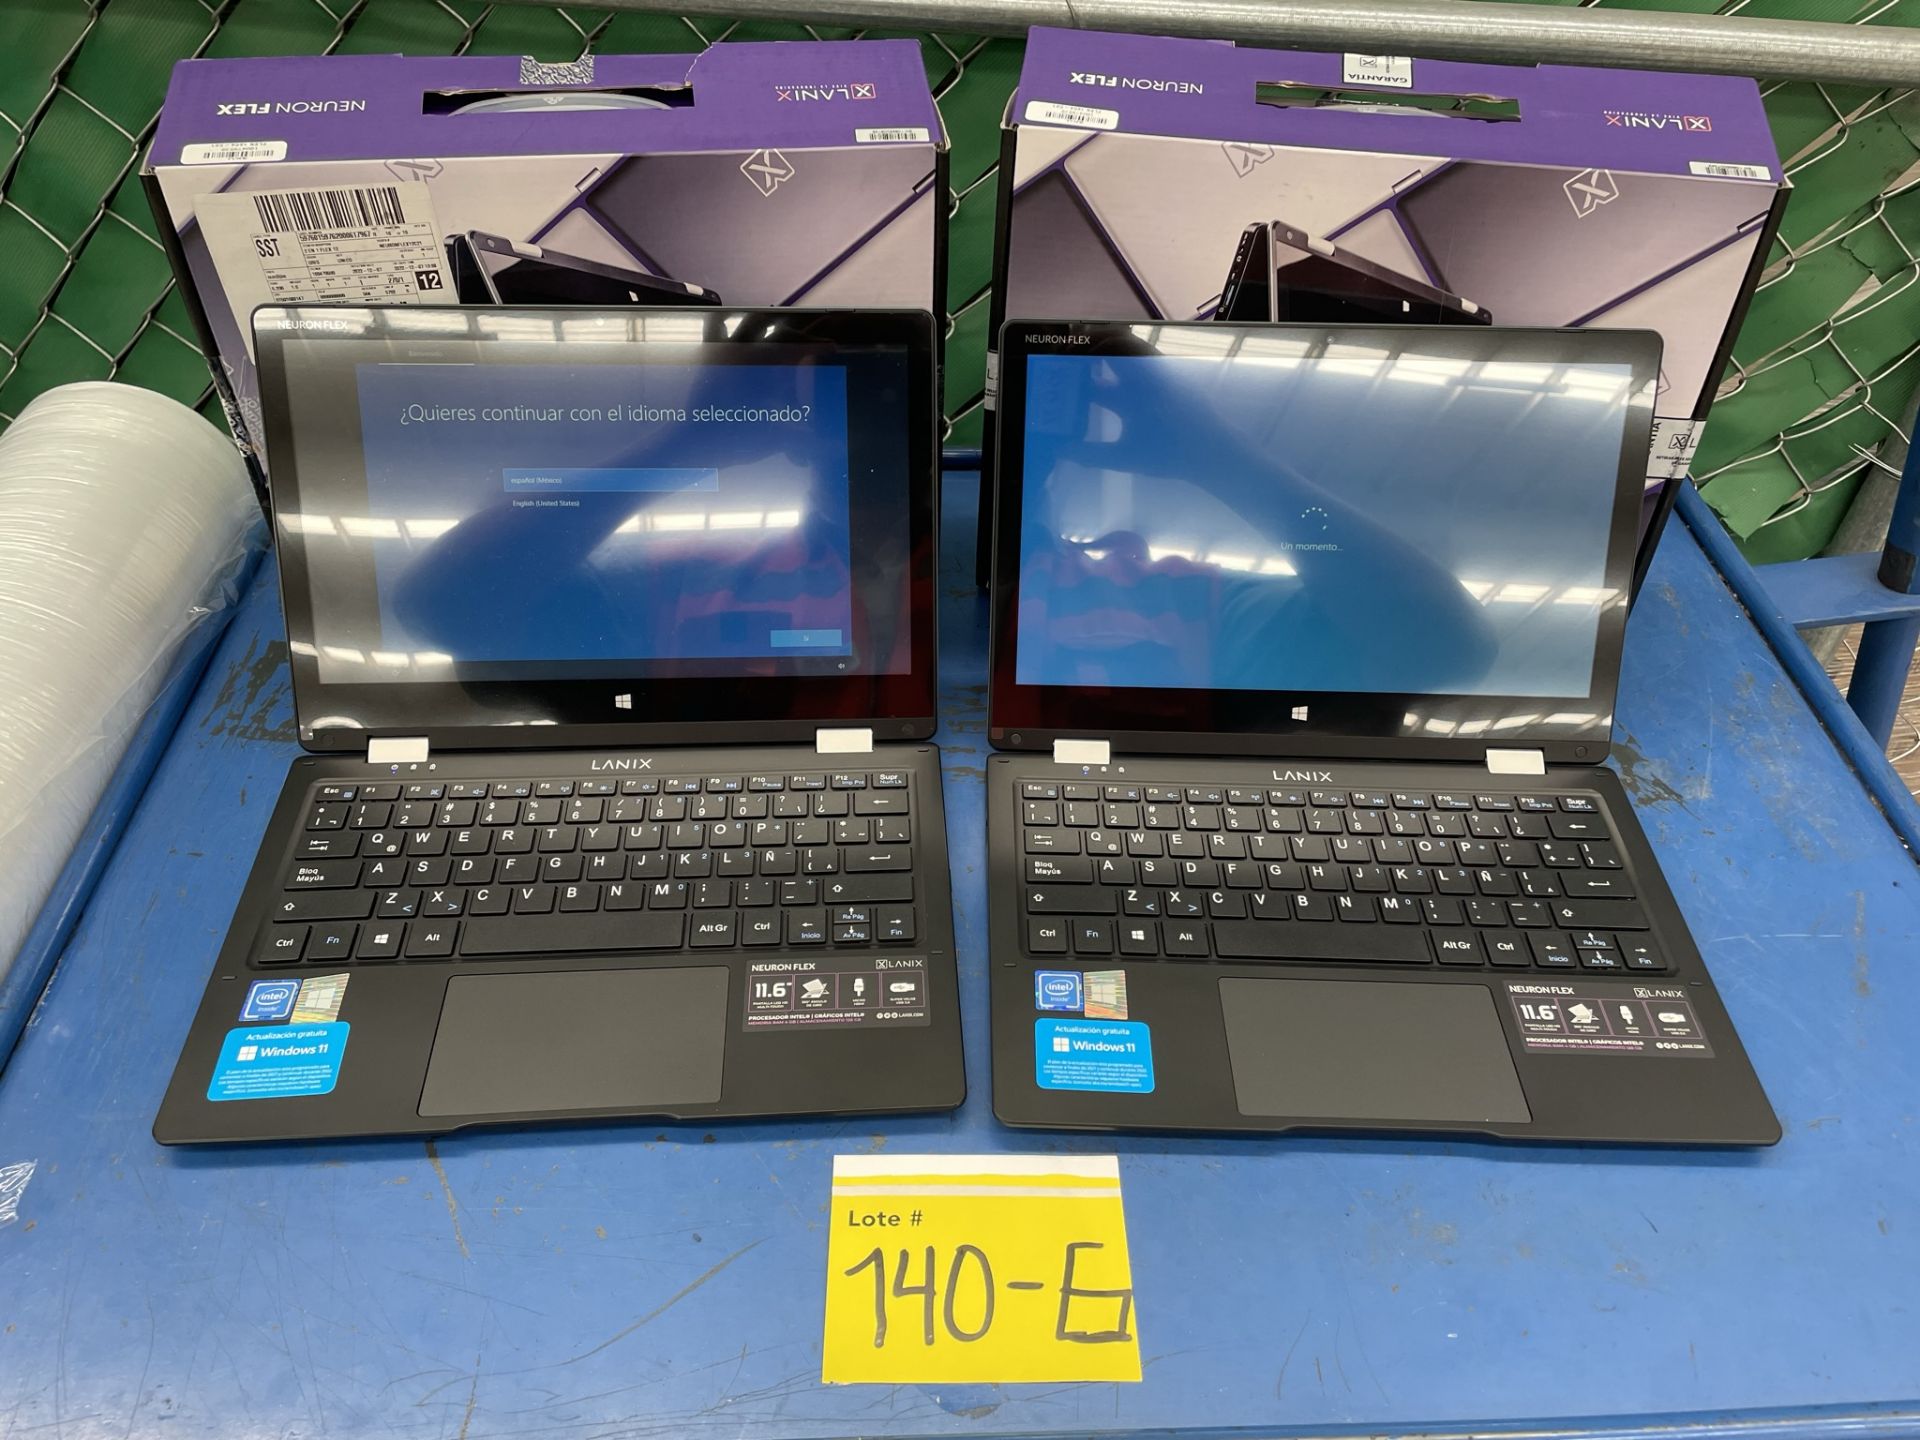 (EQUIPO NUEVO) Lote De 2 Laptops Contiene: 1 Laptop Marca LANIX, Modelo NEURON FLEX, Serie N/D, Col